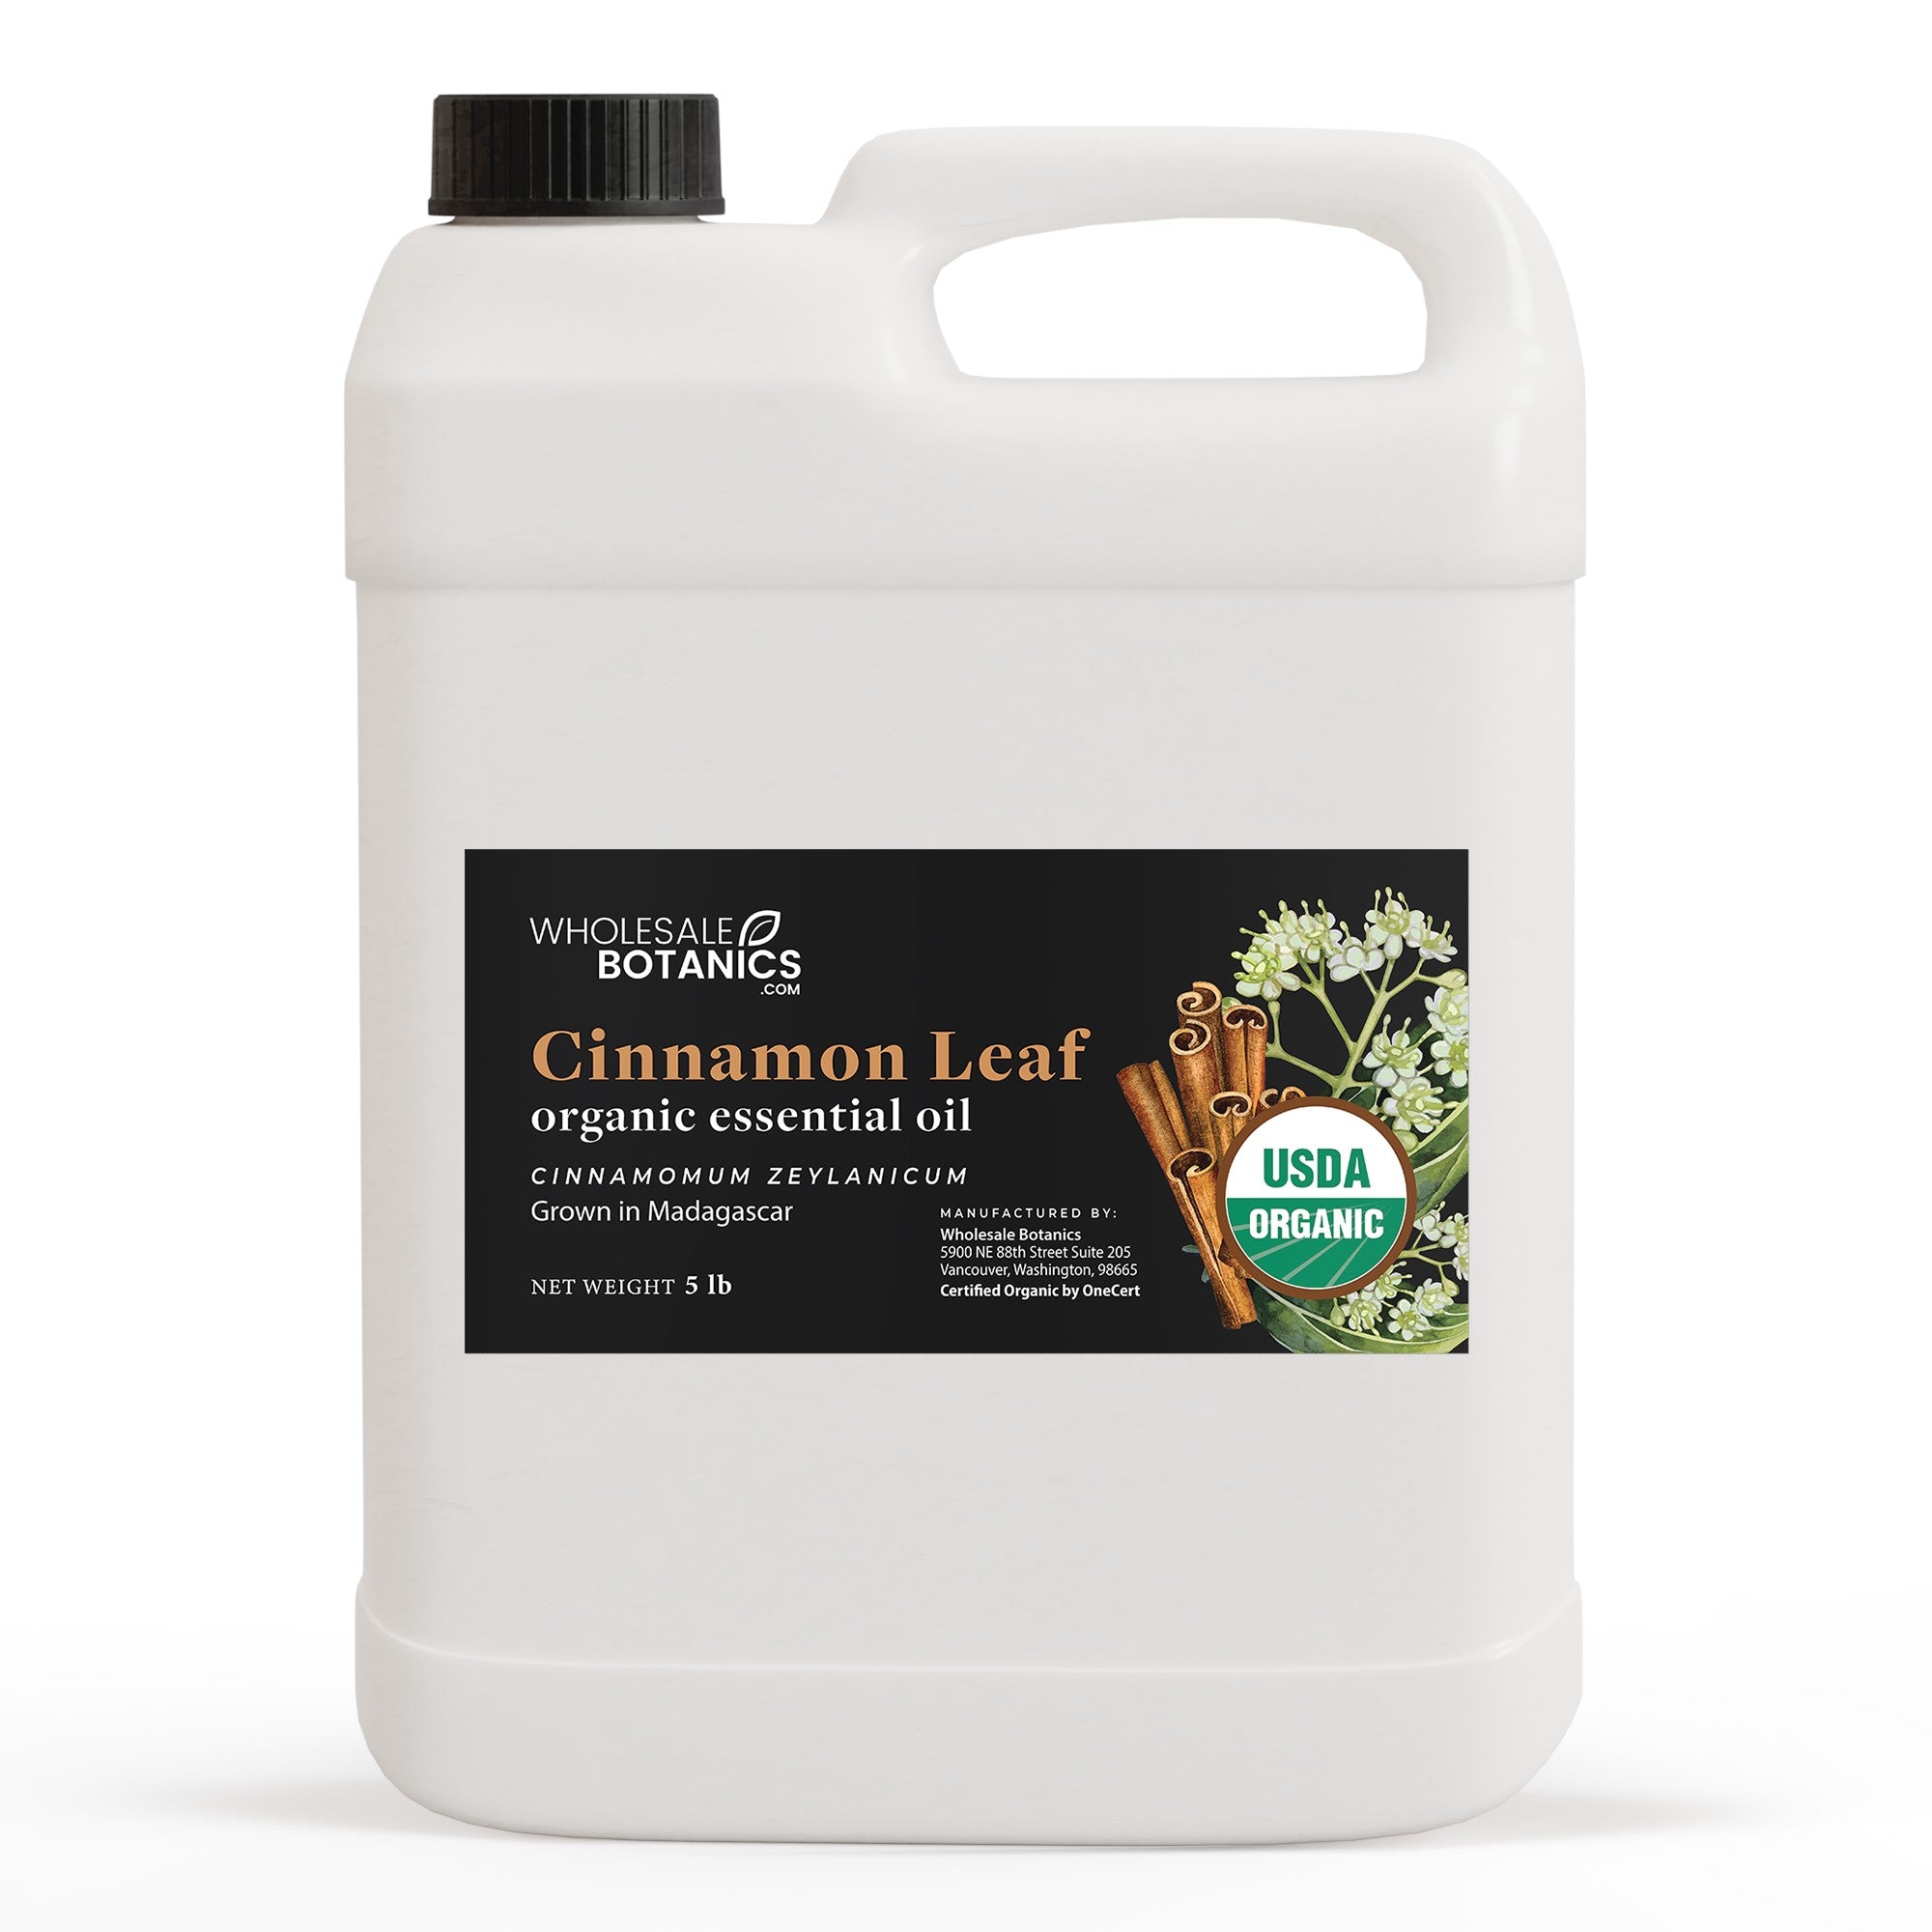 Organic Cinnamon Leaf Essential Oil